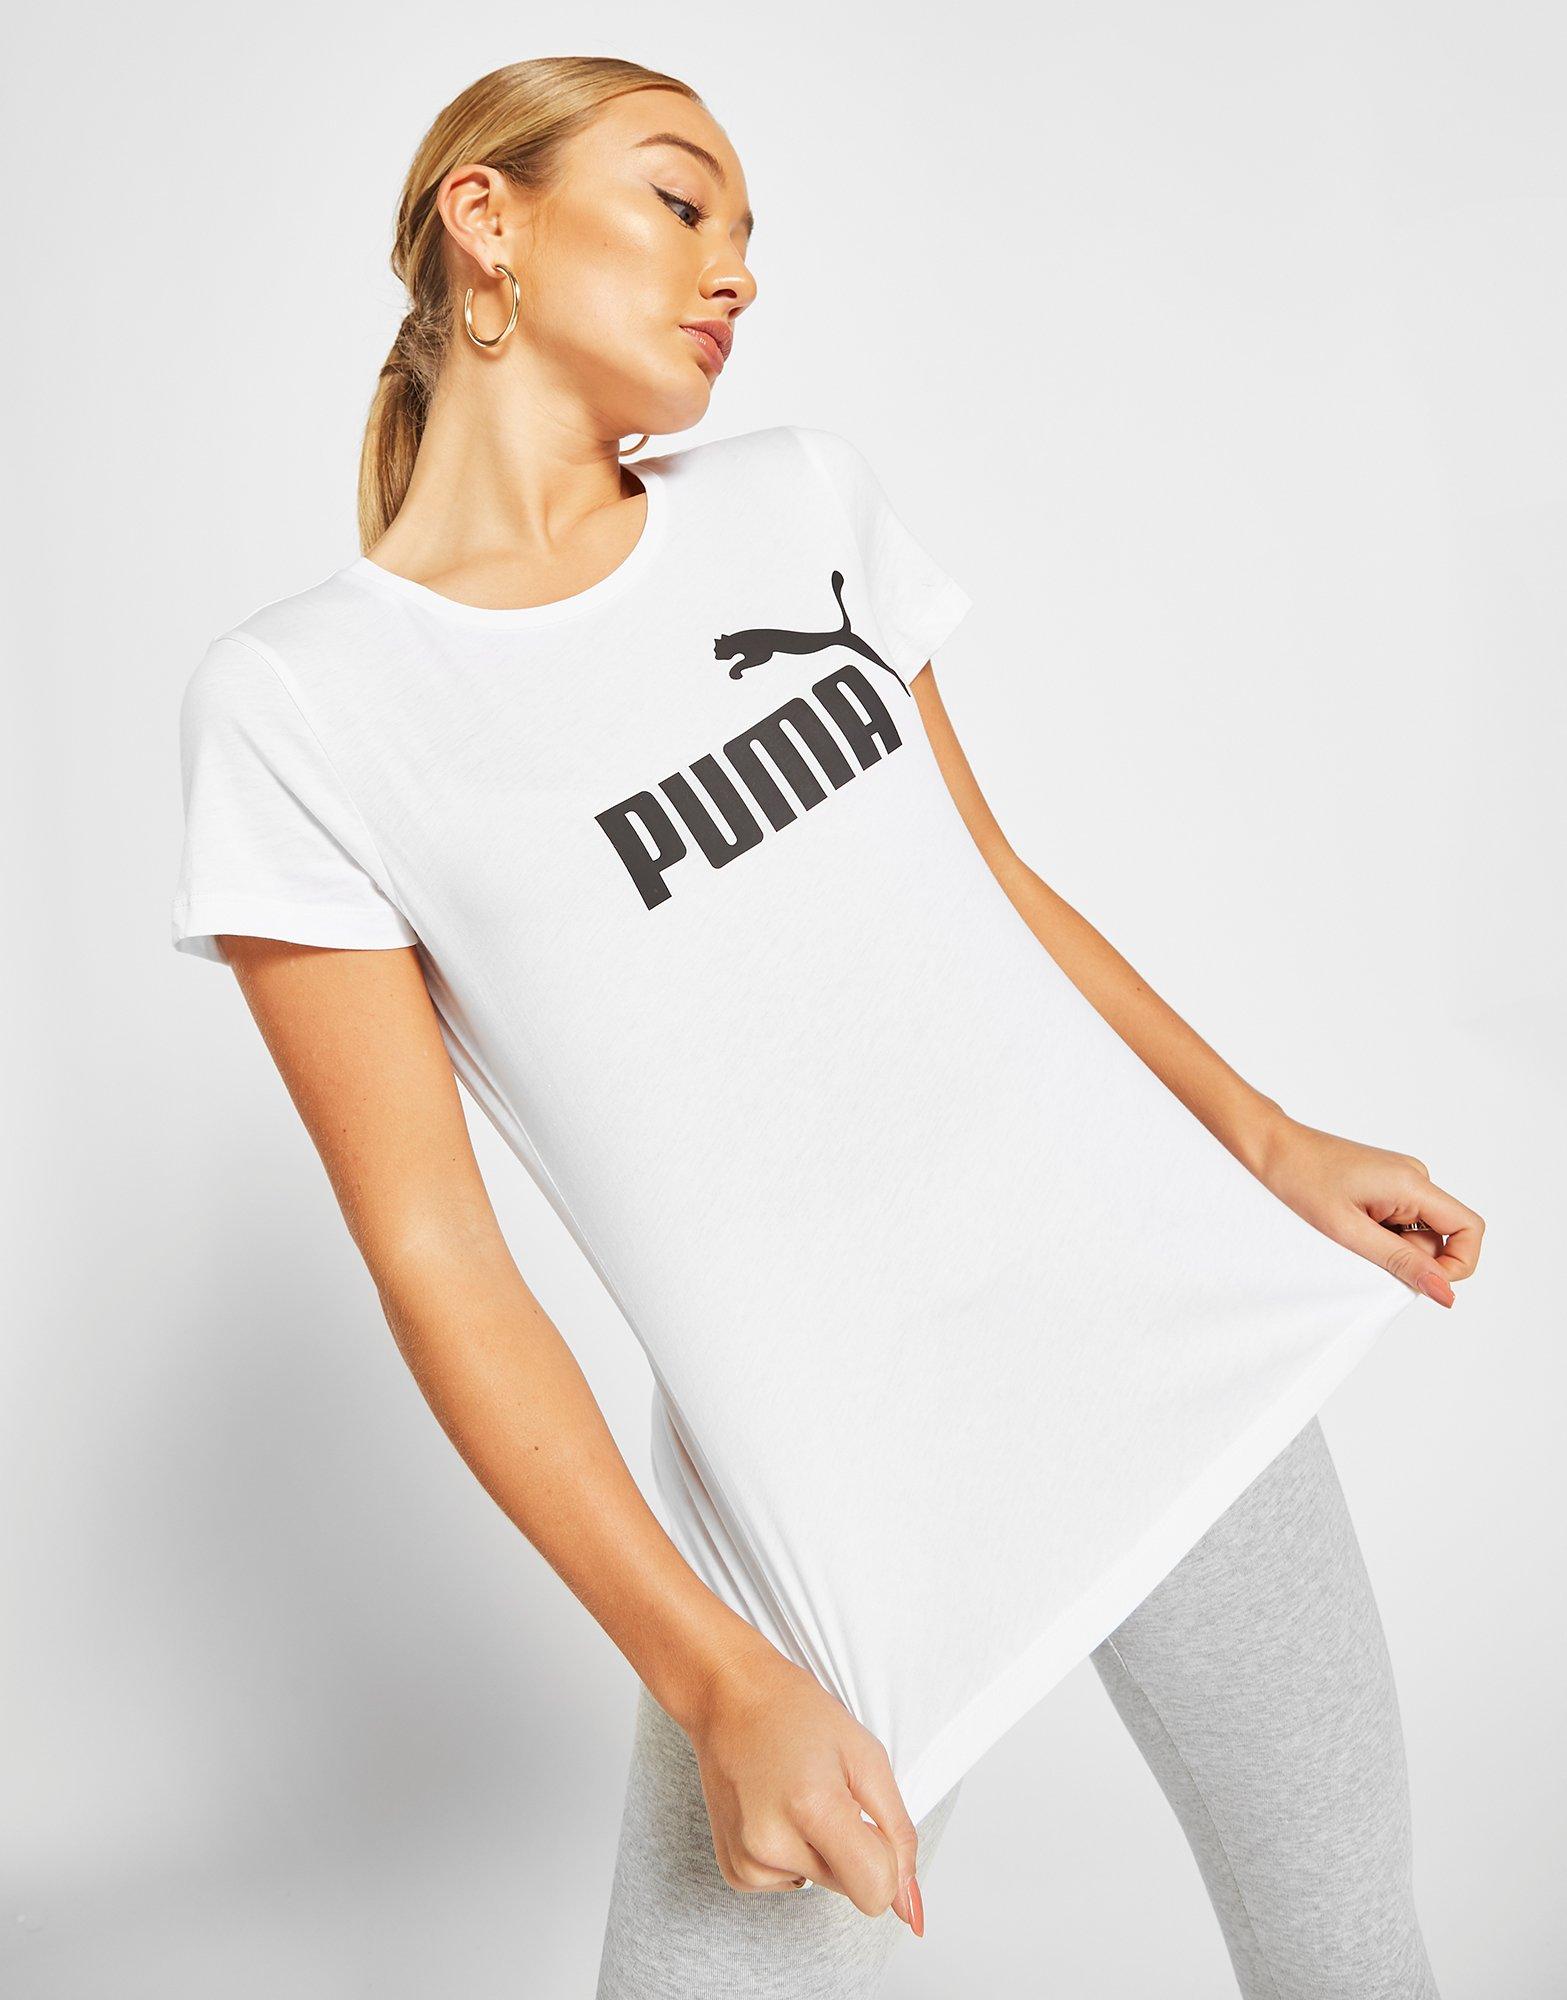 New Puma Women’s Core T-Shirt White | eBay